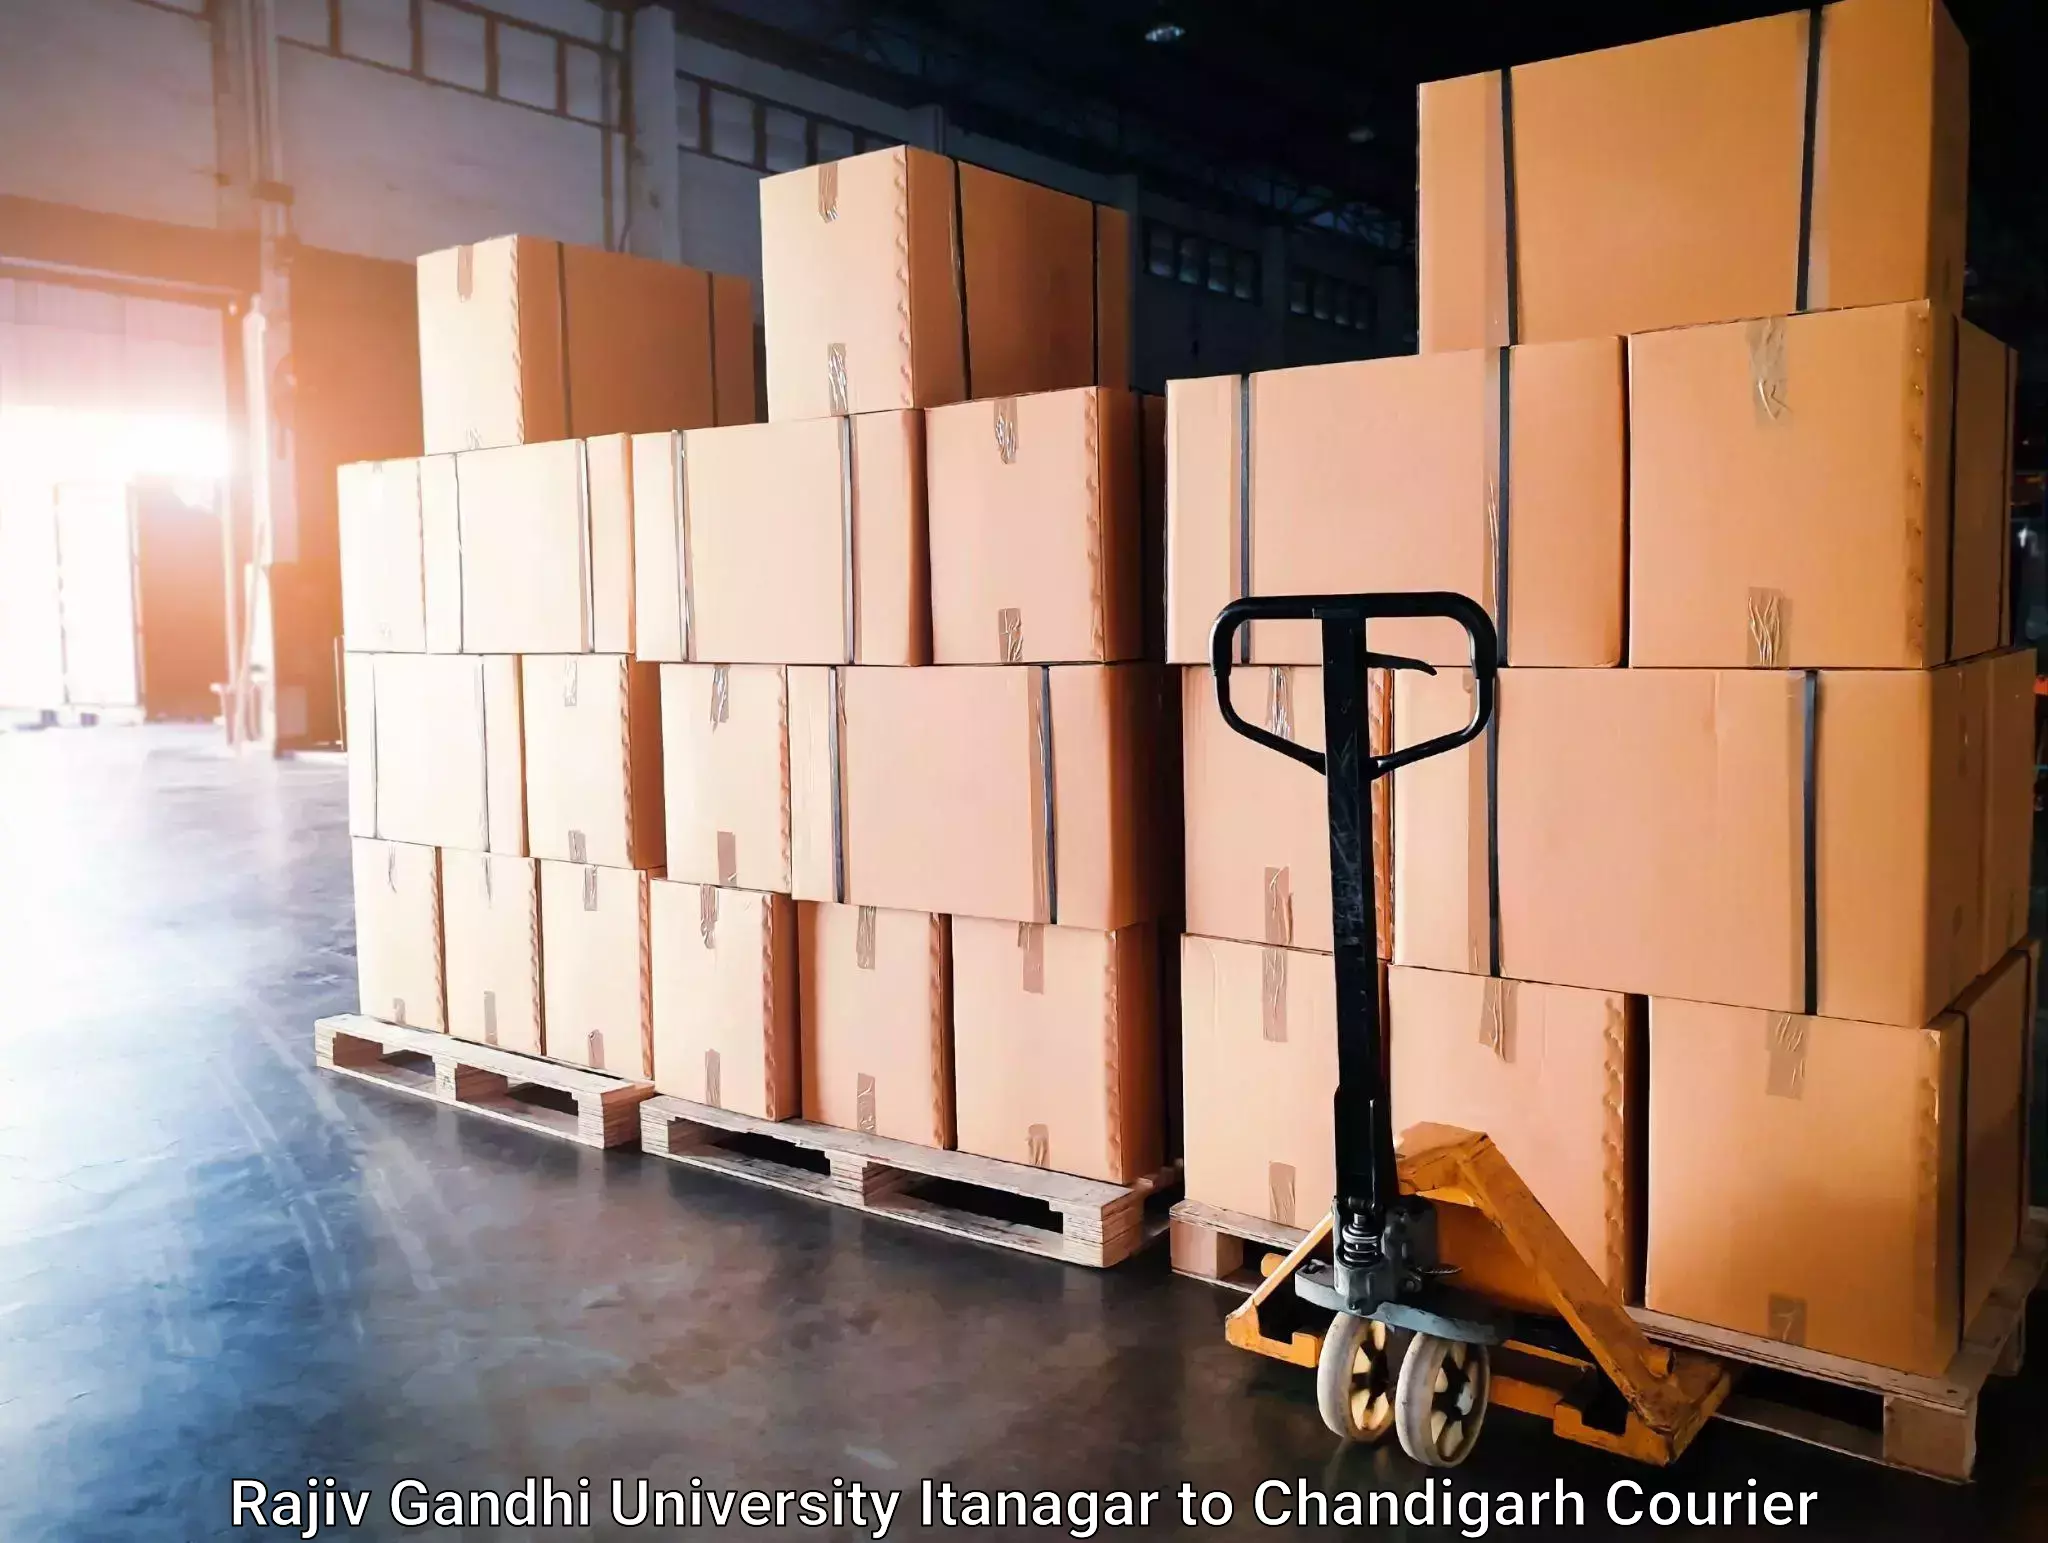 Logistics service provider Rajiv Gandhi University Itanagar to Chandigarh